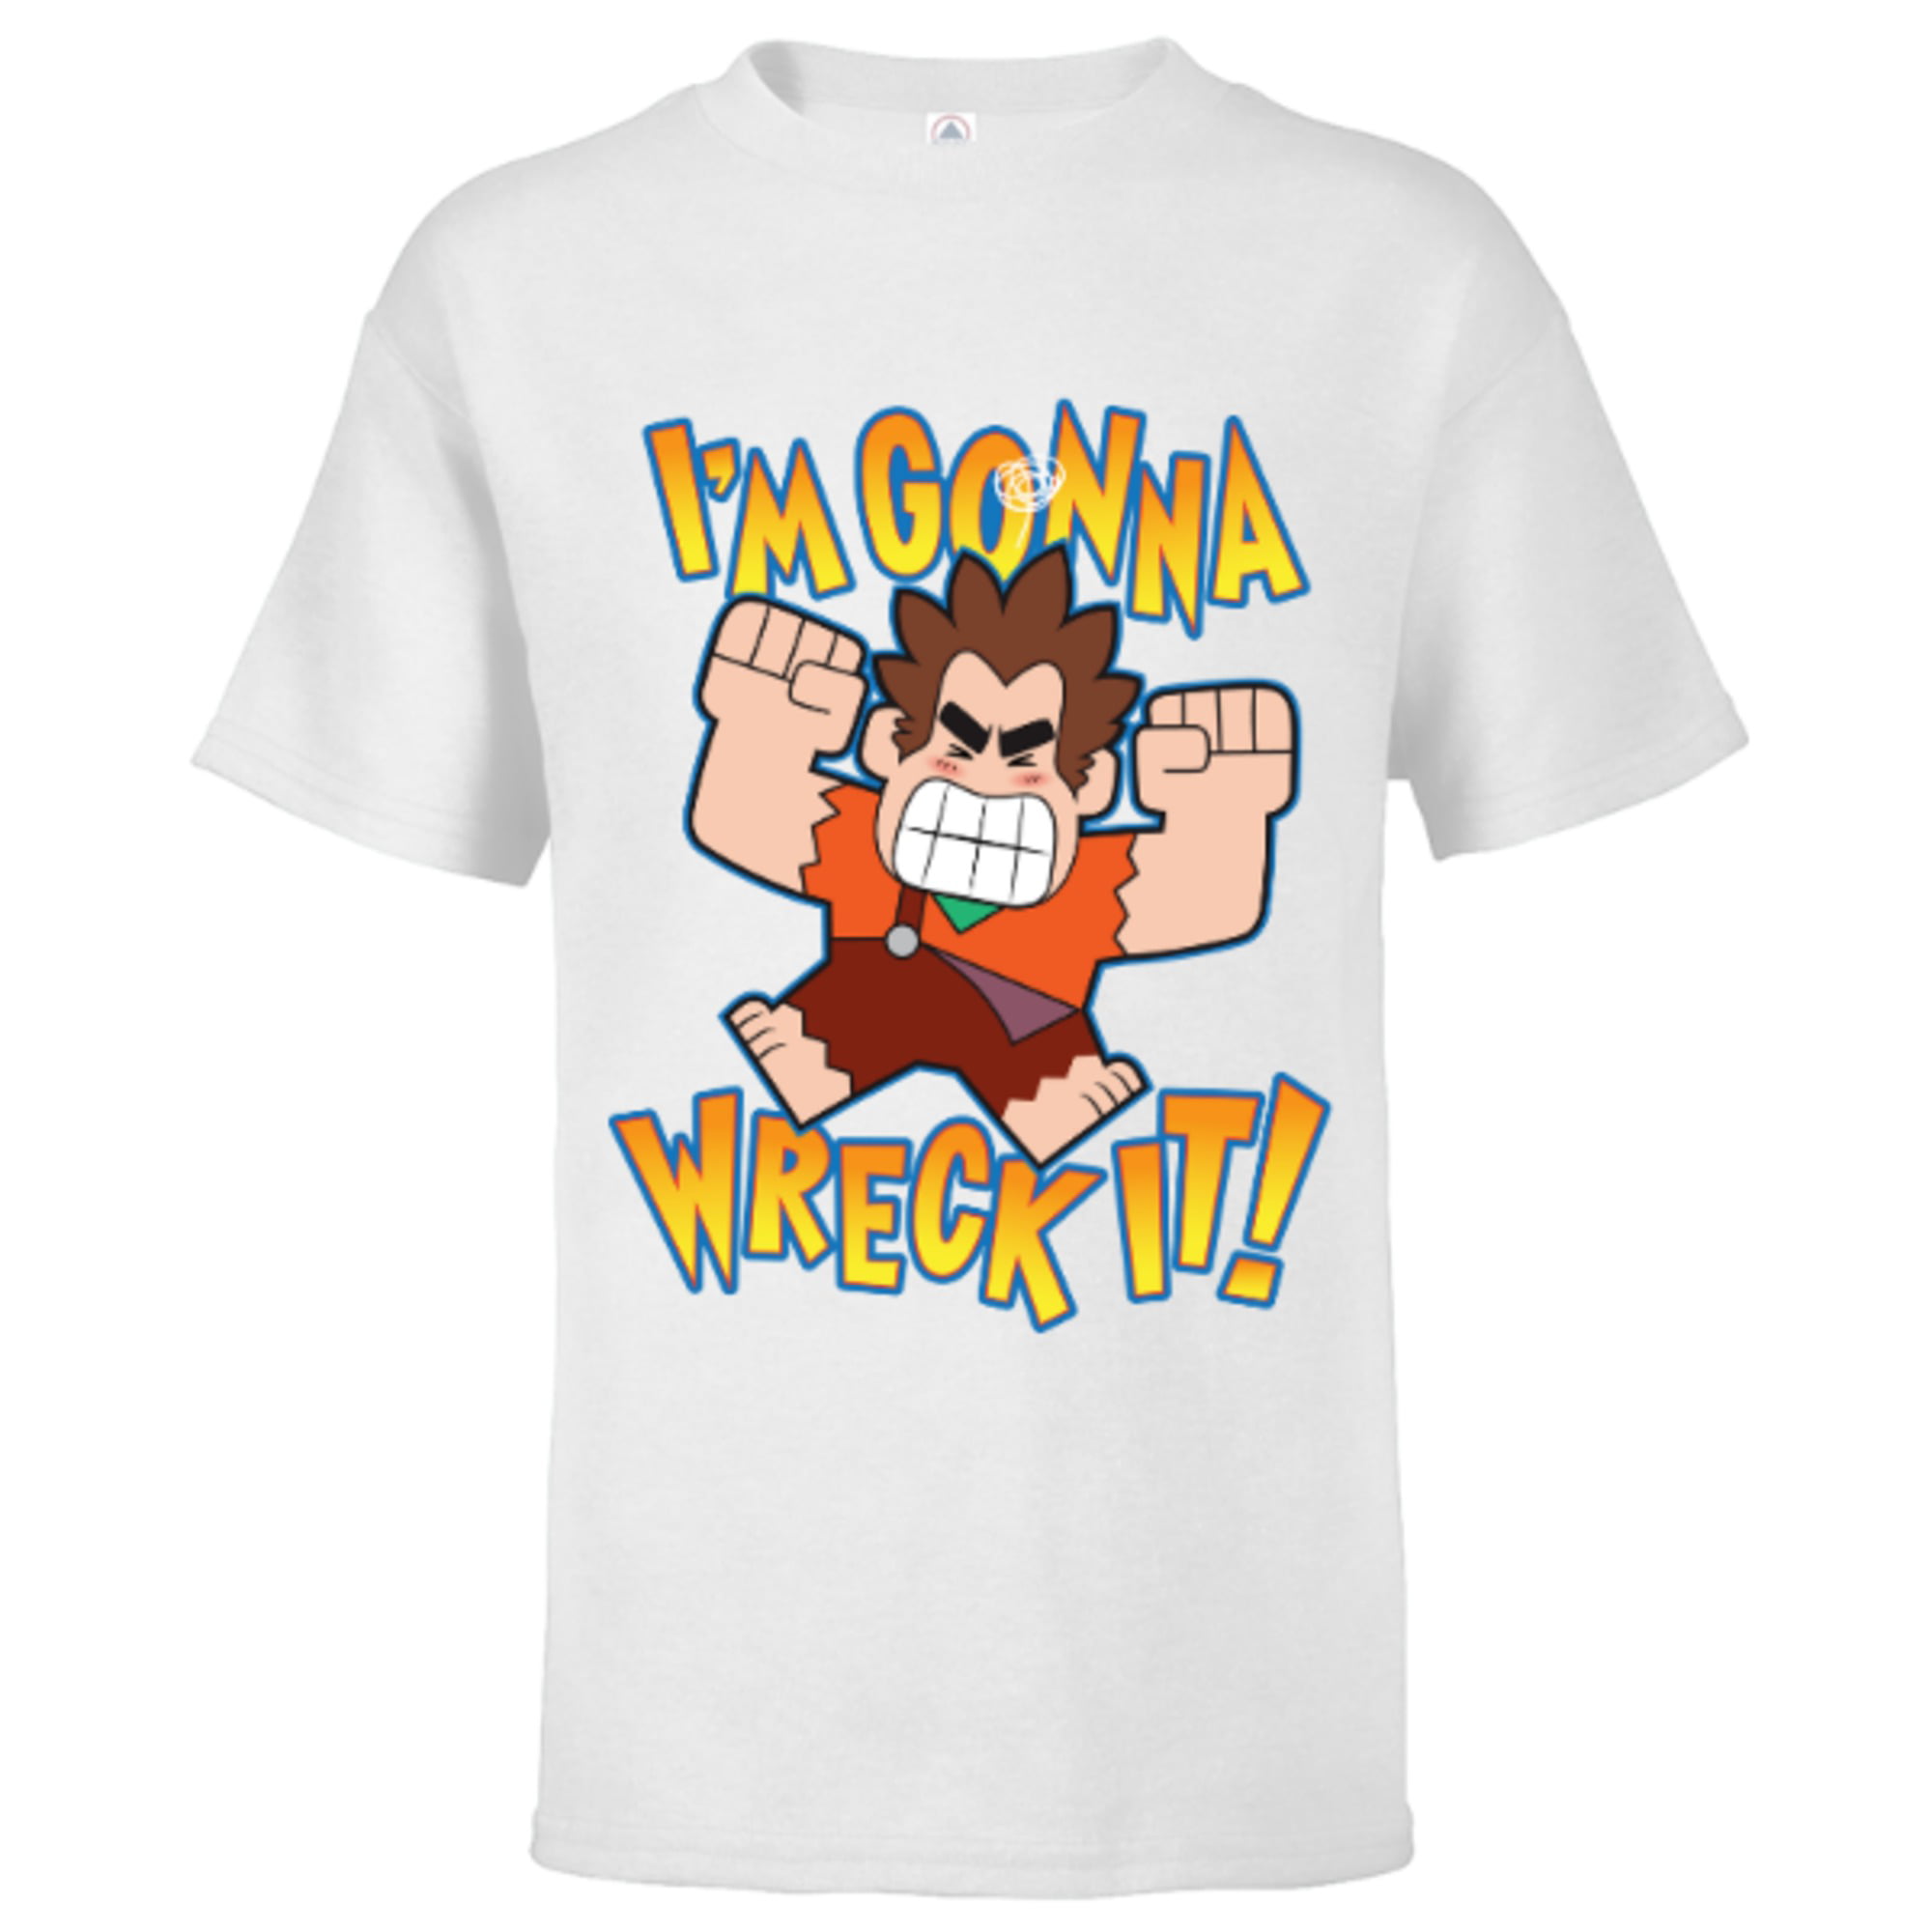 Sleeve Short Wreck for Gonna T Disney T-Shirt Customized-Red It - Breaks the - Internet Kids Ralph -Shirt I\'m